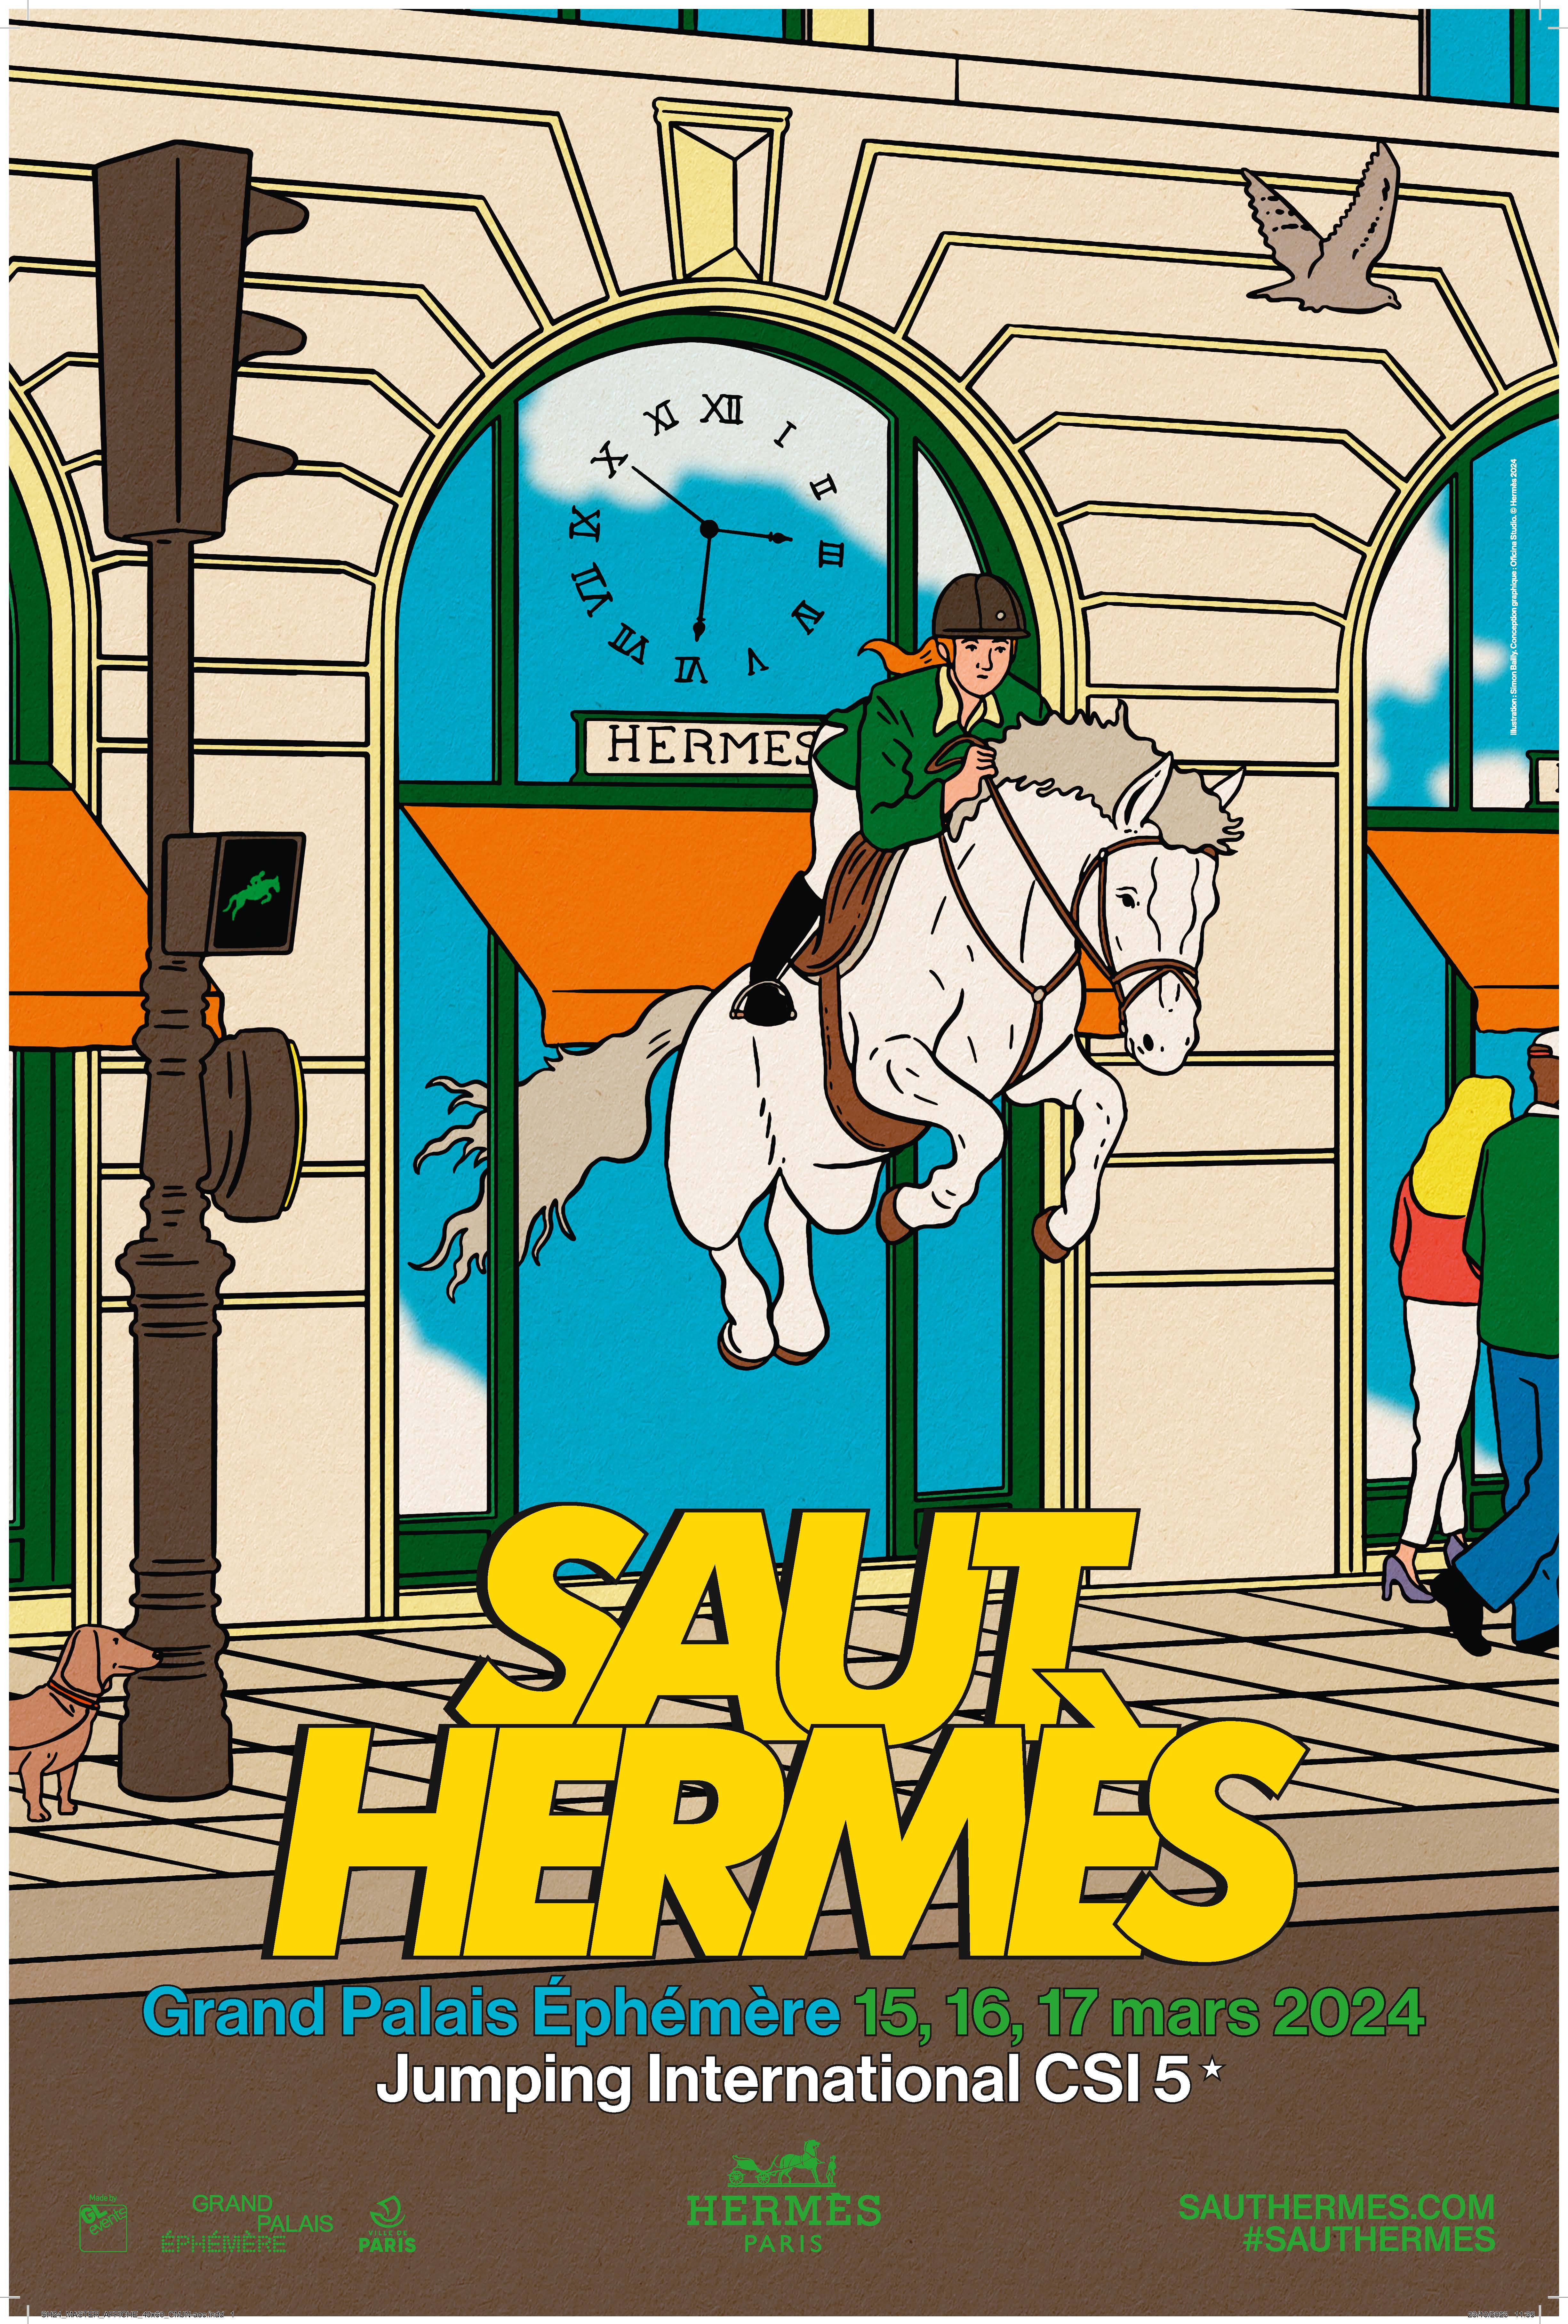 Hermés presents the fourteenth edition of the Saut Hermès